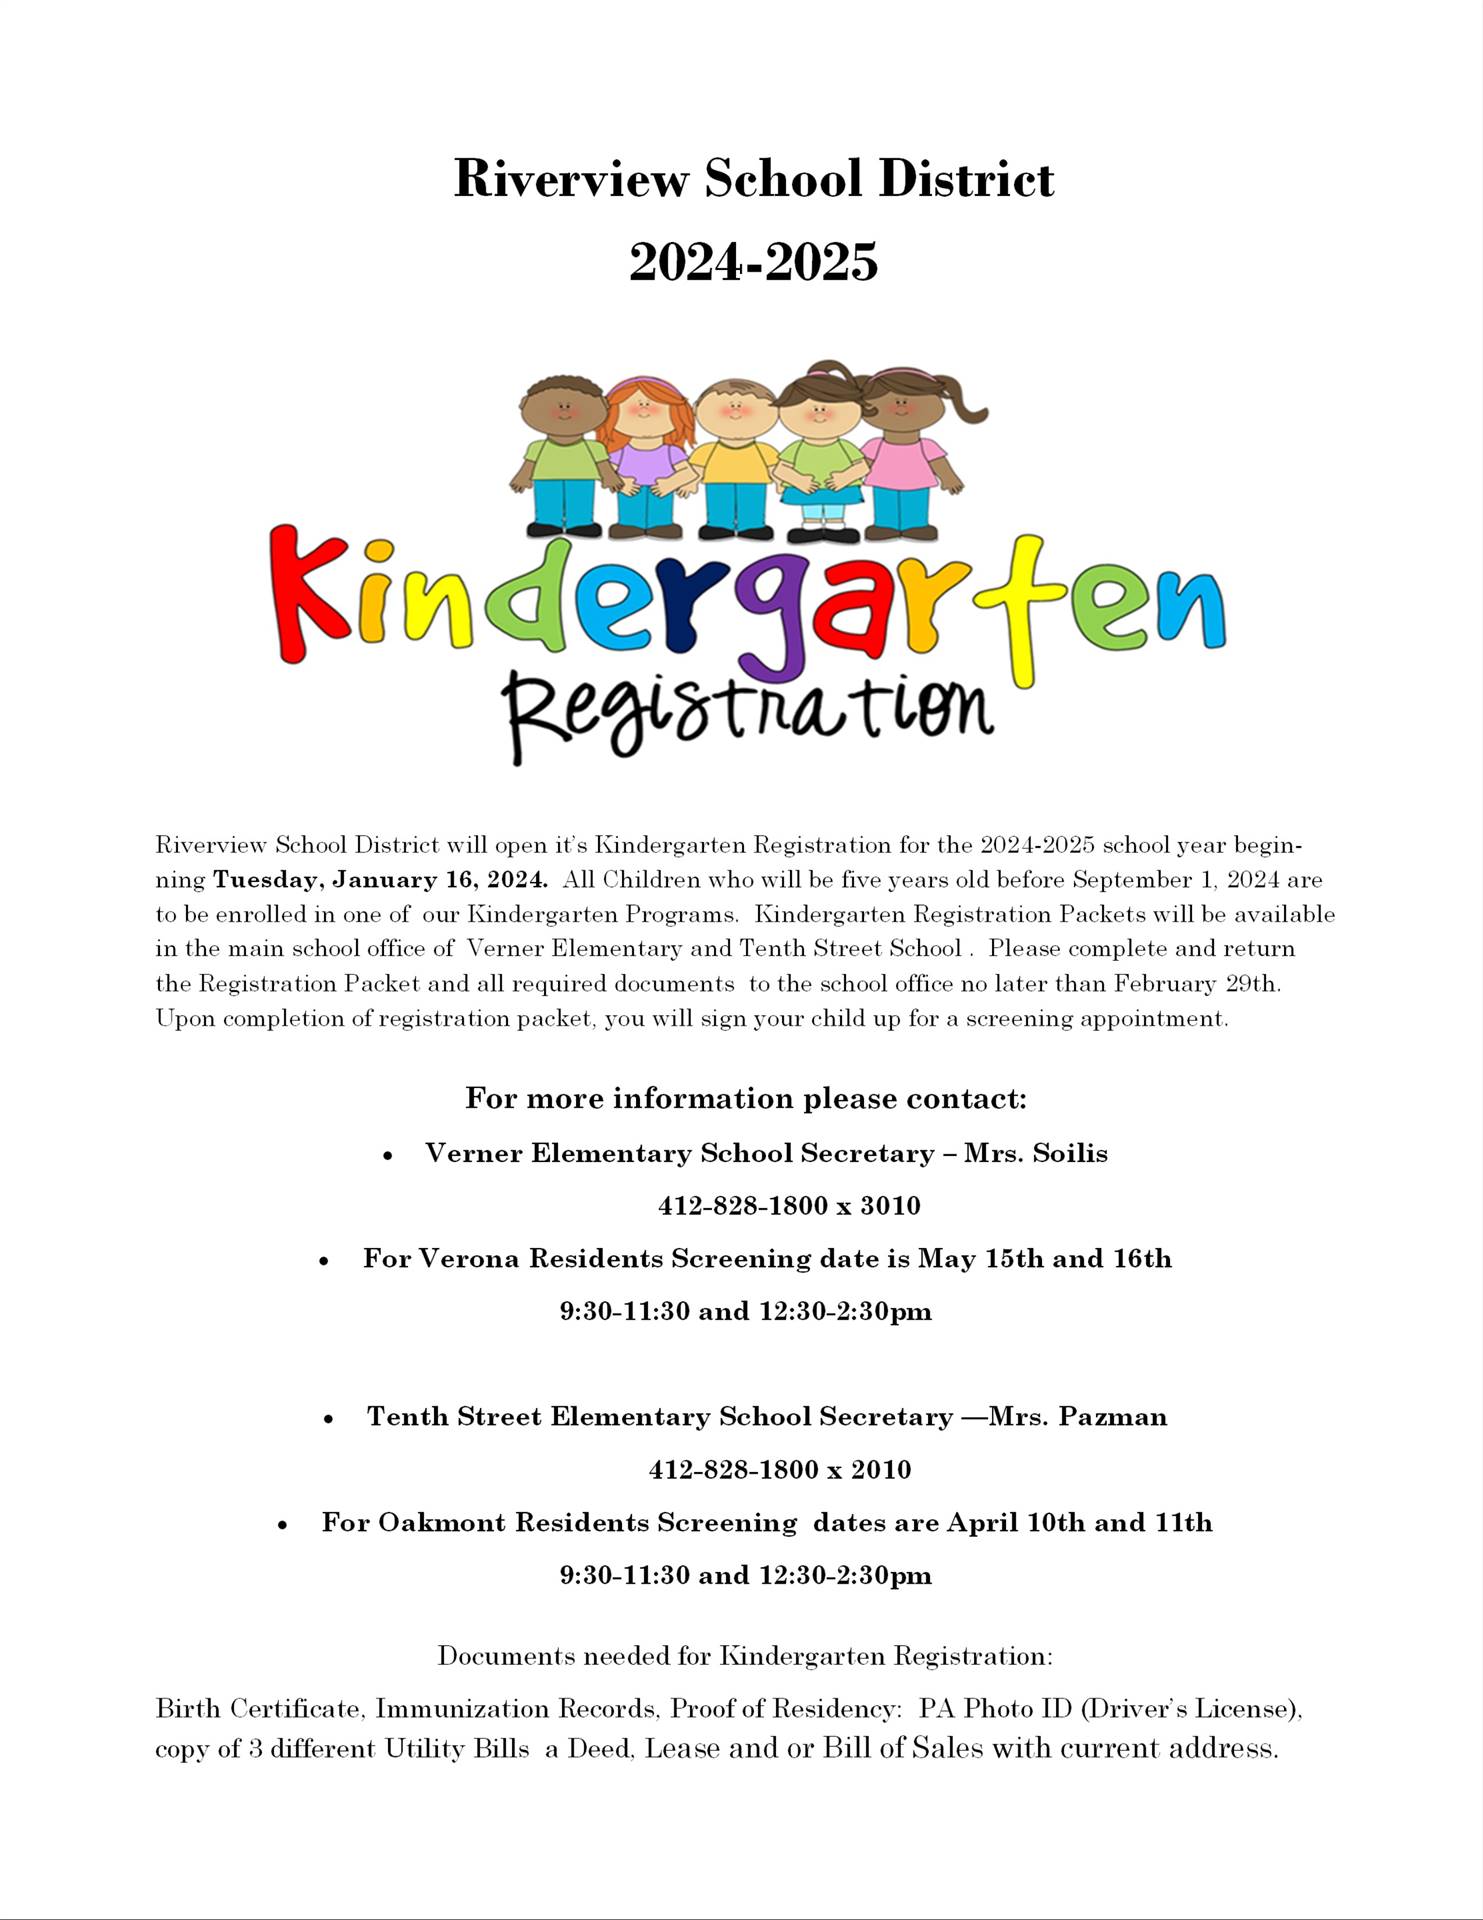 RSD 2024-2025 Kindergarten Registration